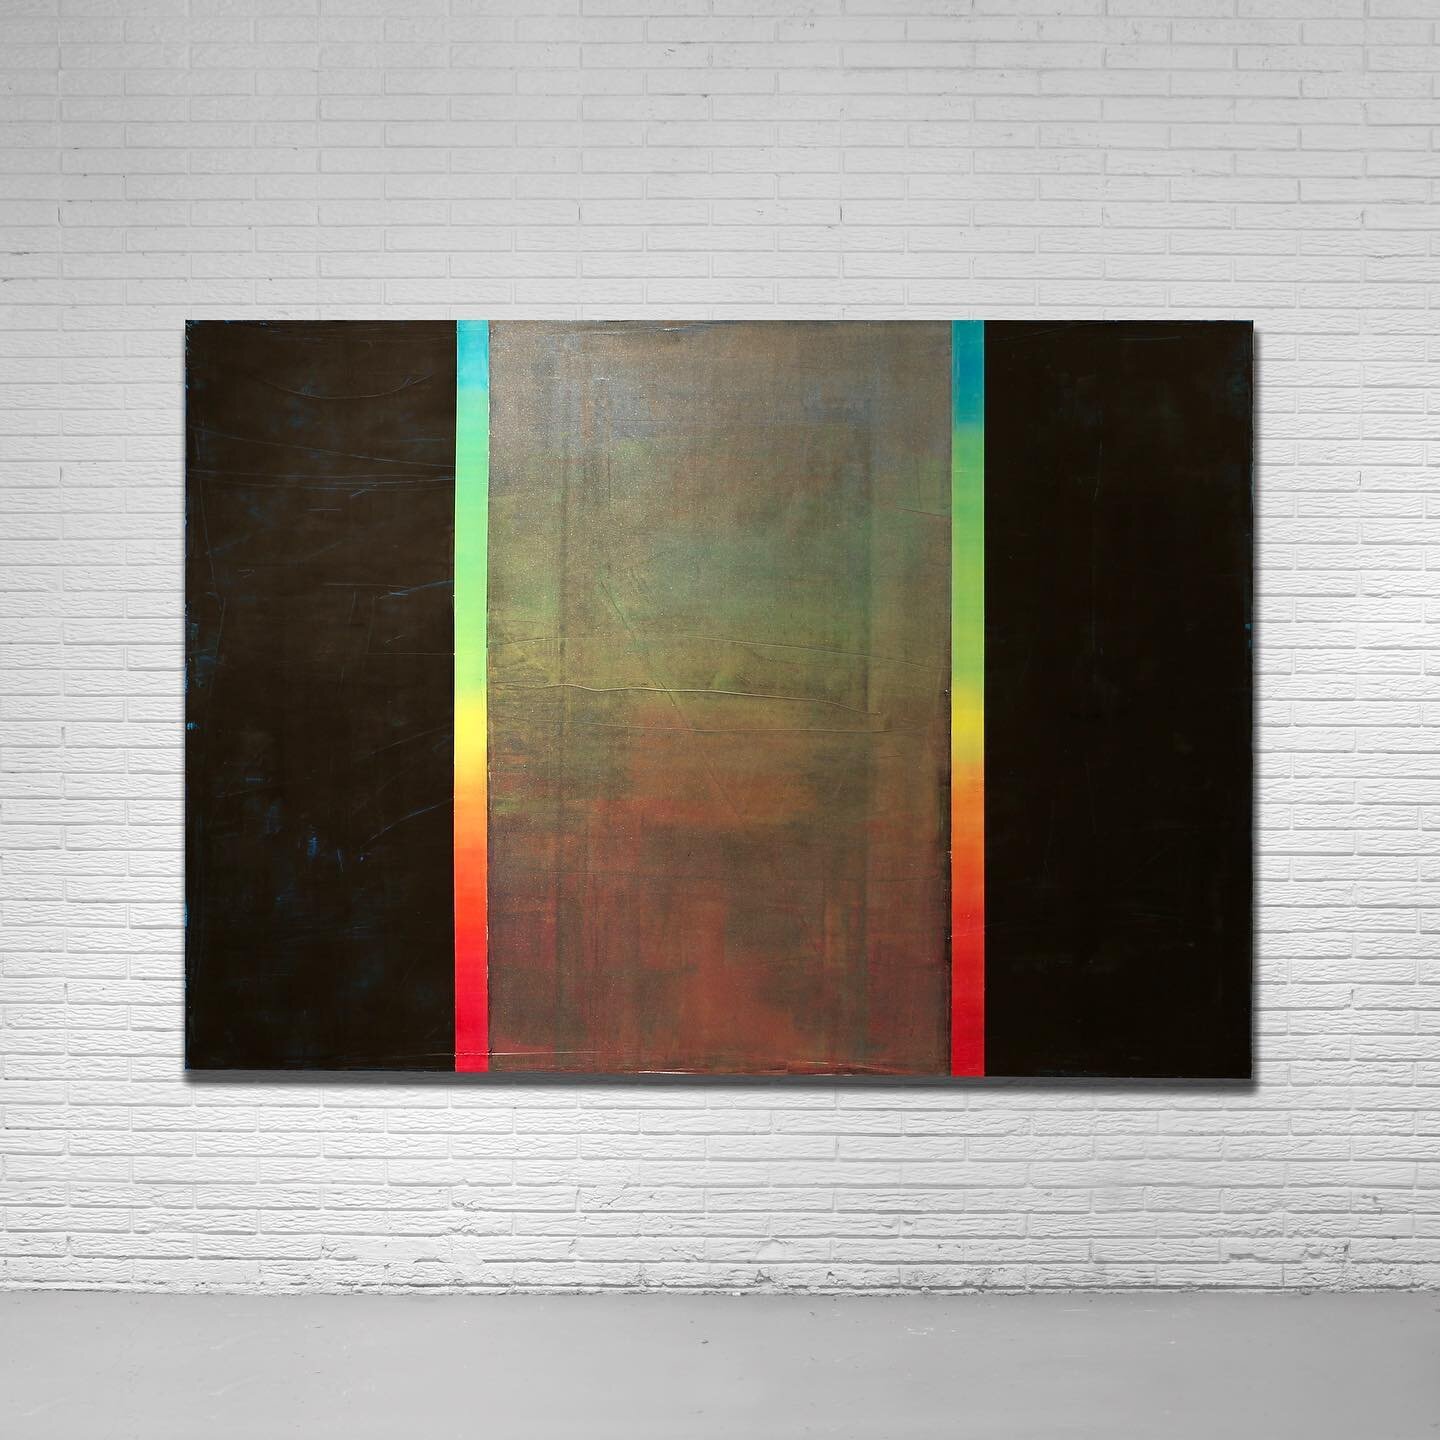 .
Medium is the Message
Oil on canvas
.
.
.
#ozmodern #ryanoswald #texasartist #contemporaryart #modernart #abstractart #artist_features #artcollector 
#artcurators #minimalism #design #artgallery  #minimalandcontemporary #todaysartreport #contempora